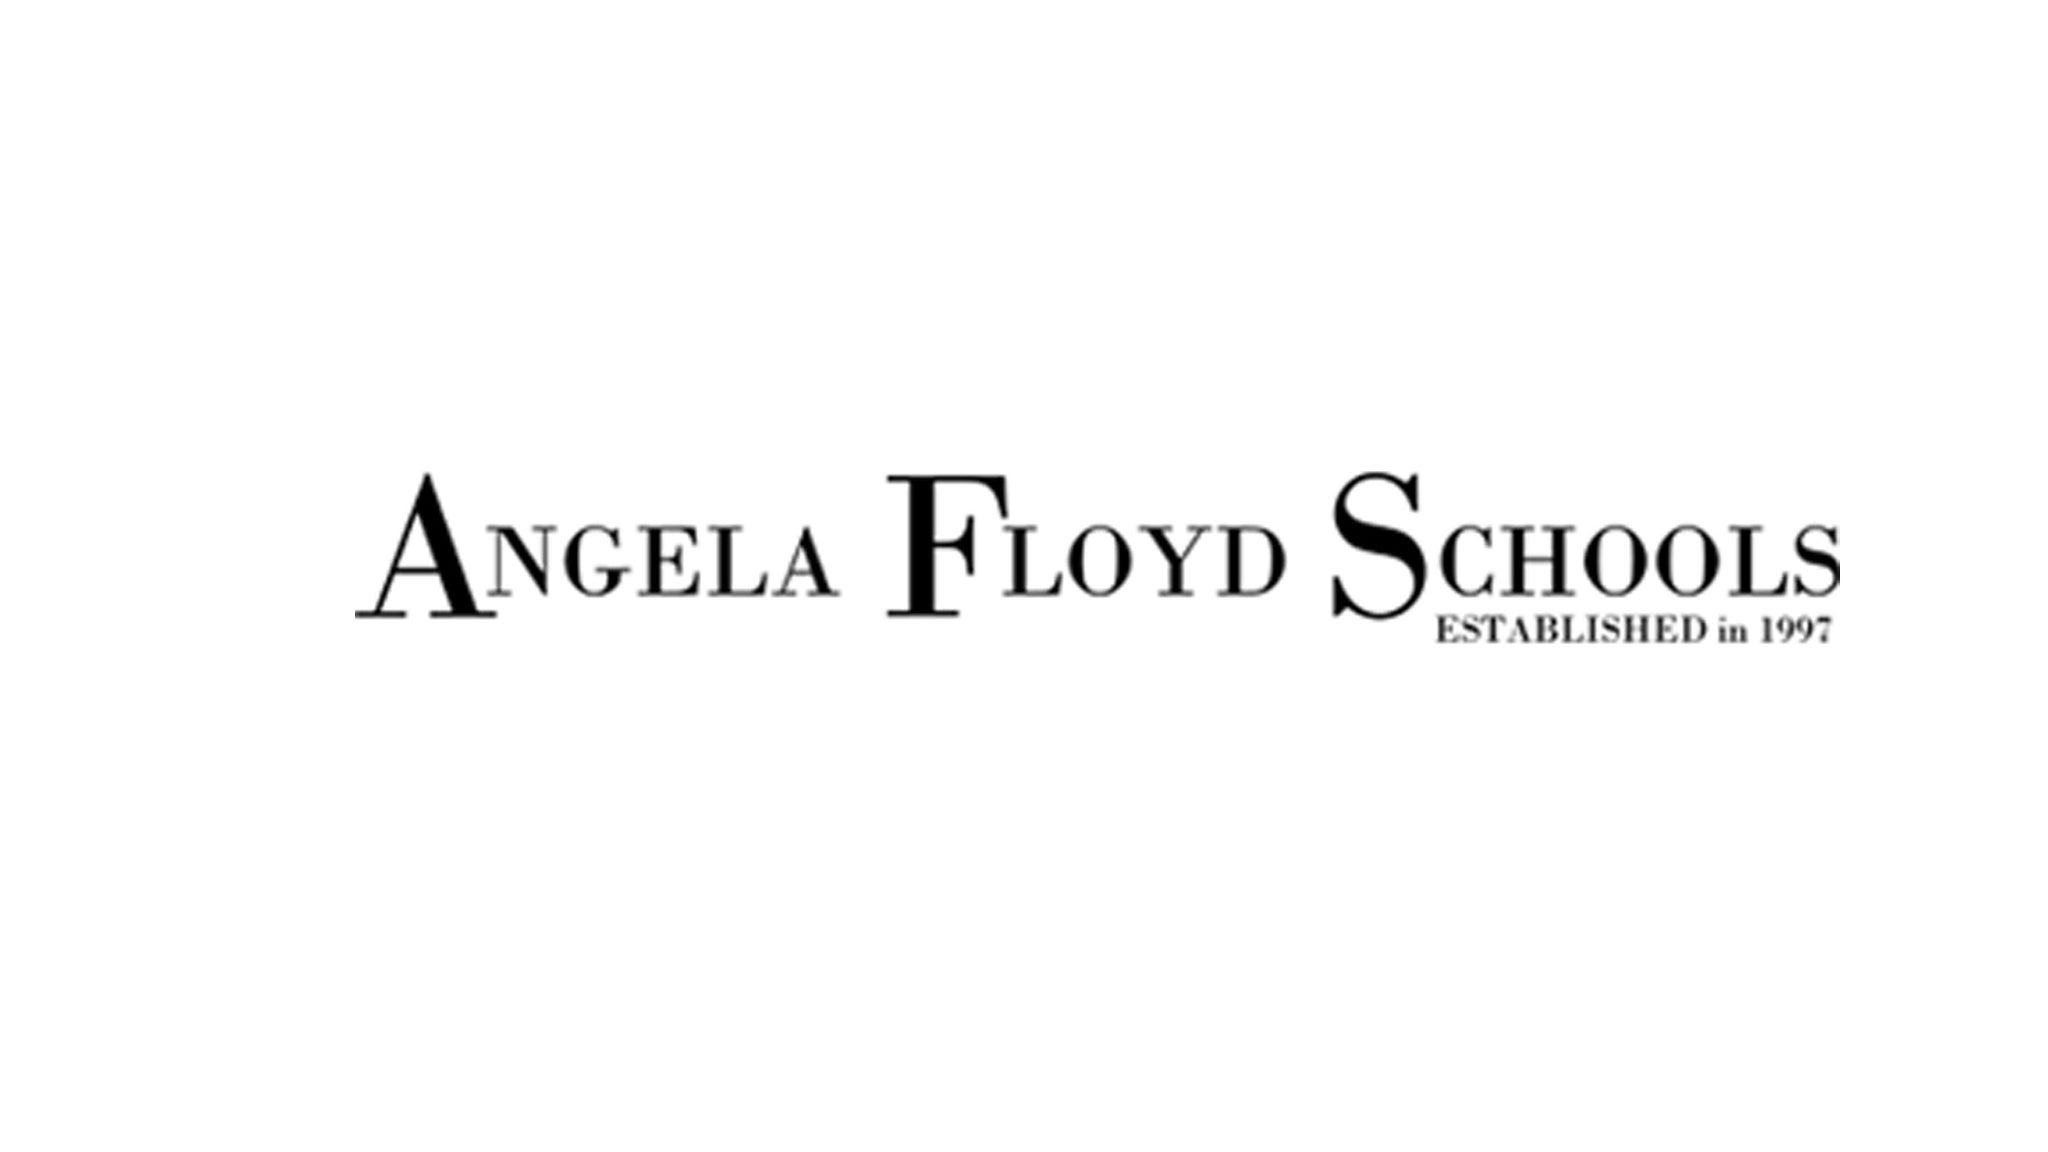 Angela Floyd Schools - Adventure Awaits